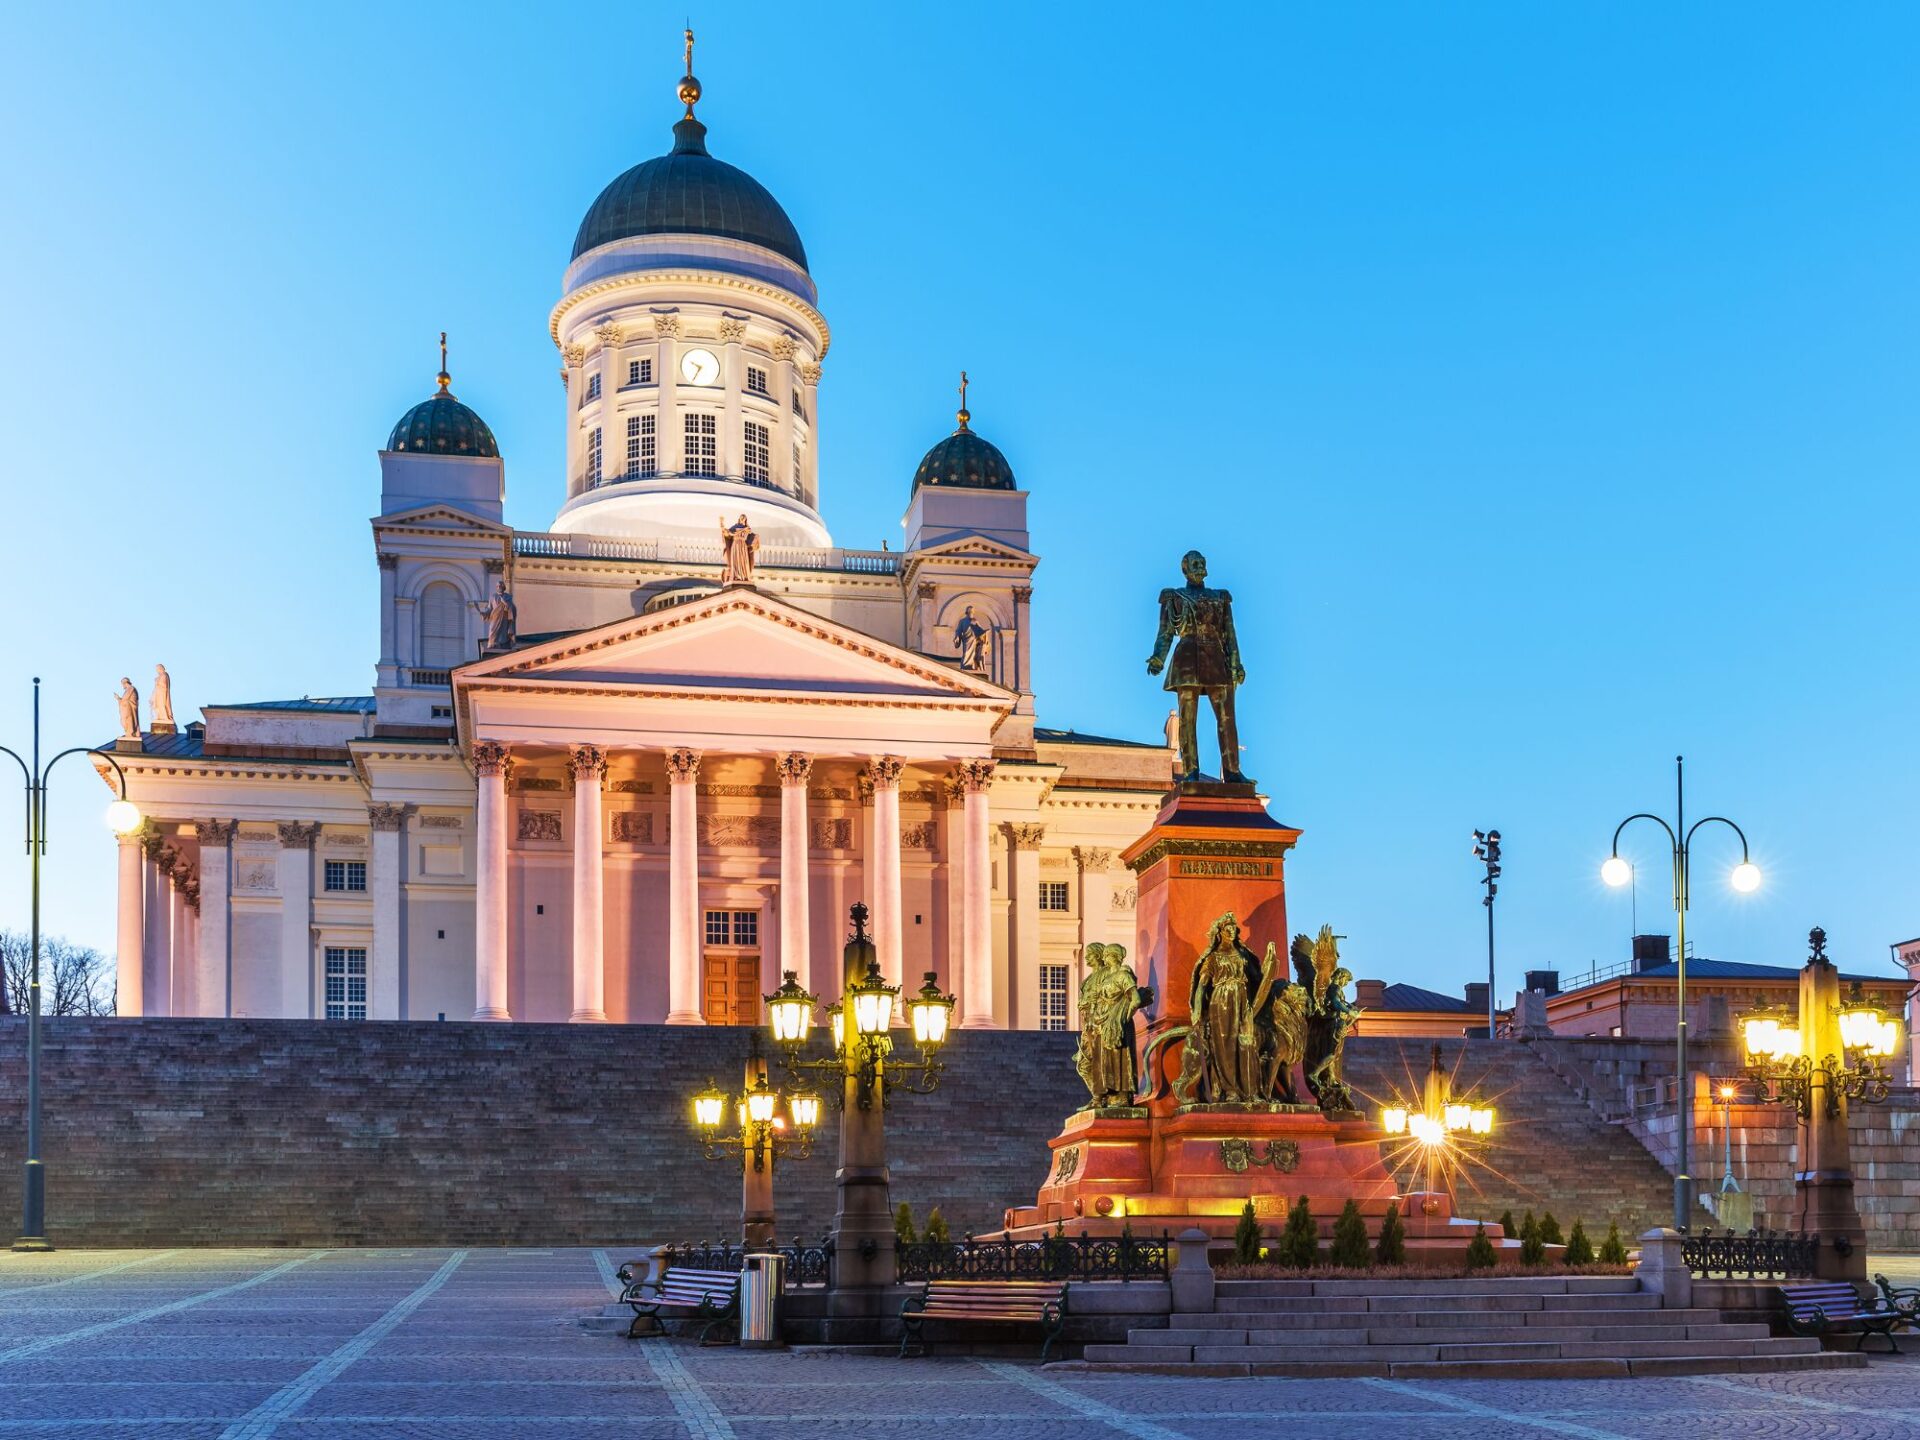 Must visit destinations in Scandinavia - Helsinki, Finland